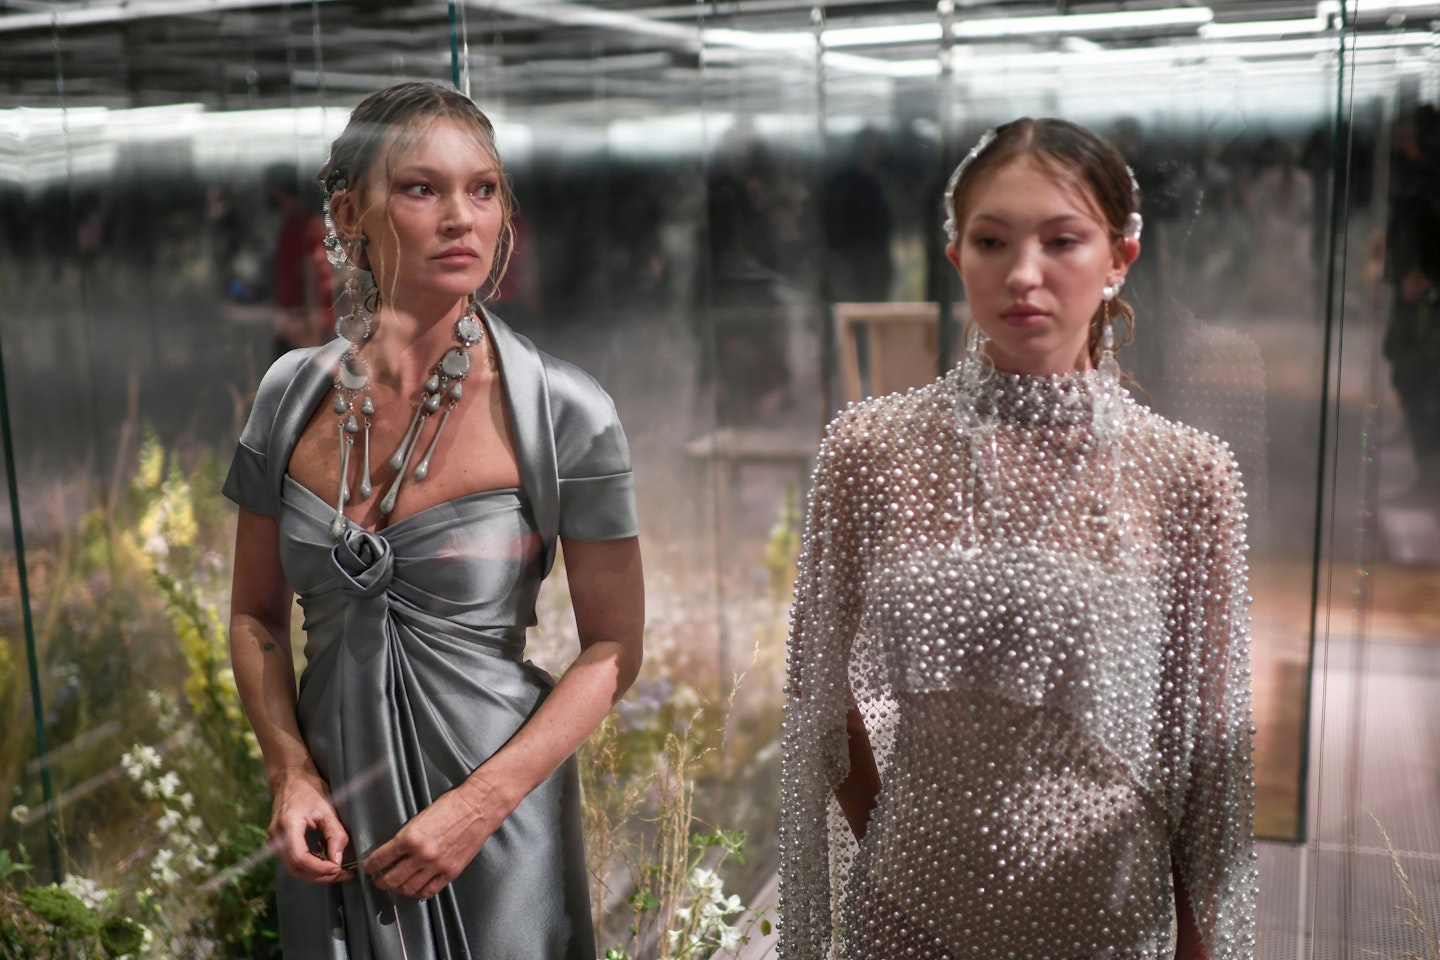 Fendi taps Dior designer Kim Jones to succeed Karl Lagerfeld